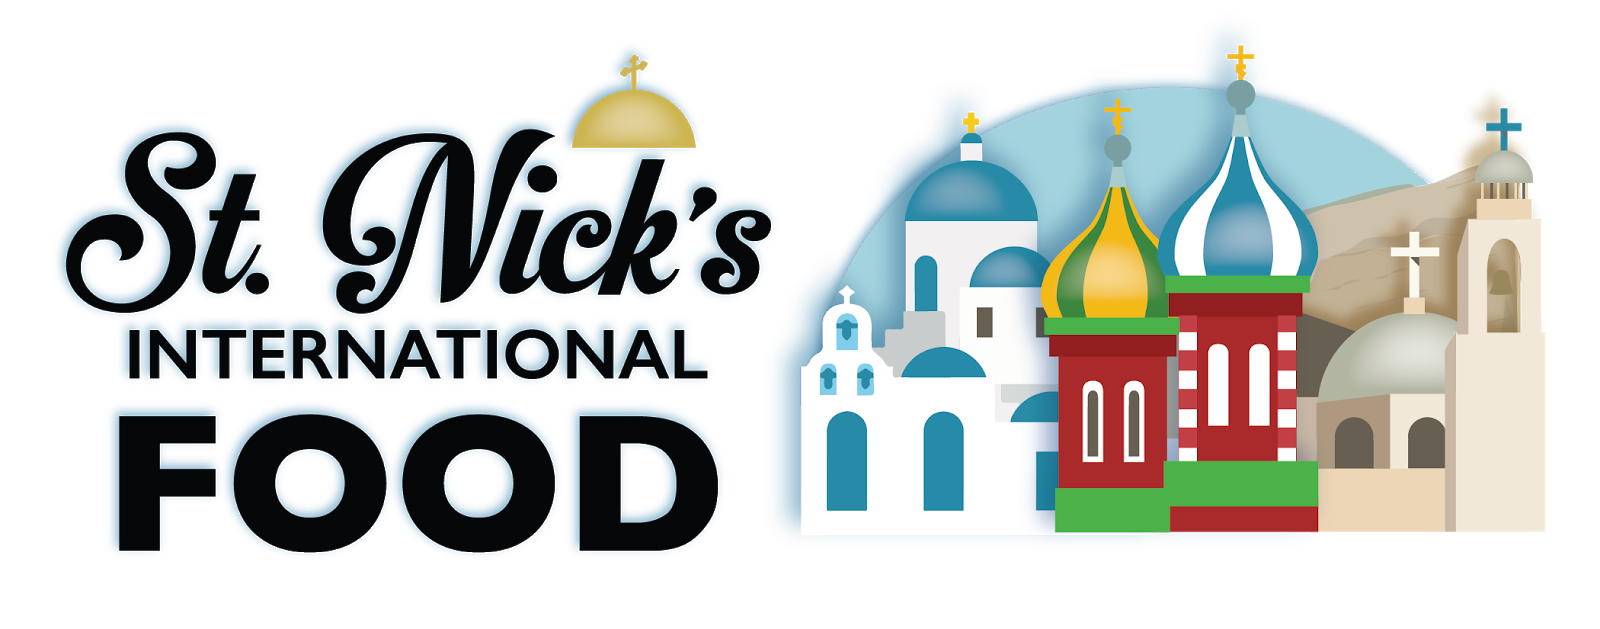 St. Nick's International Food